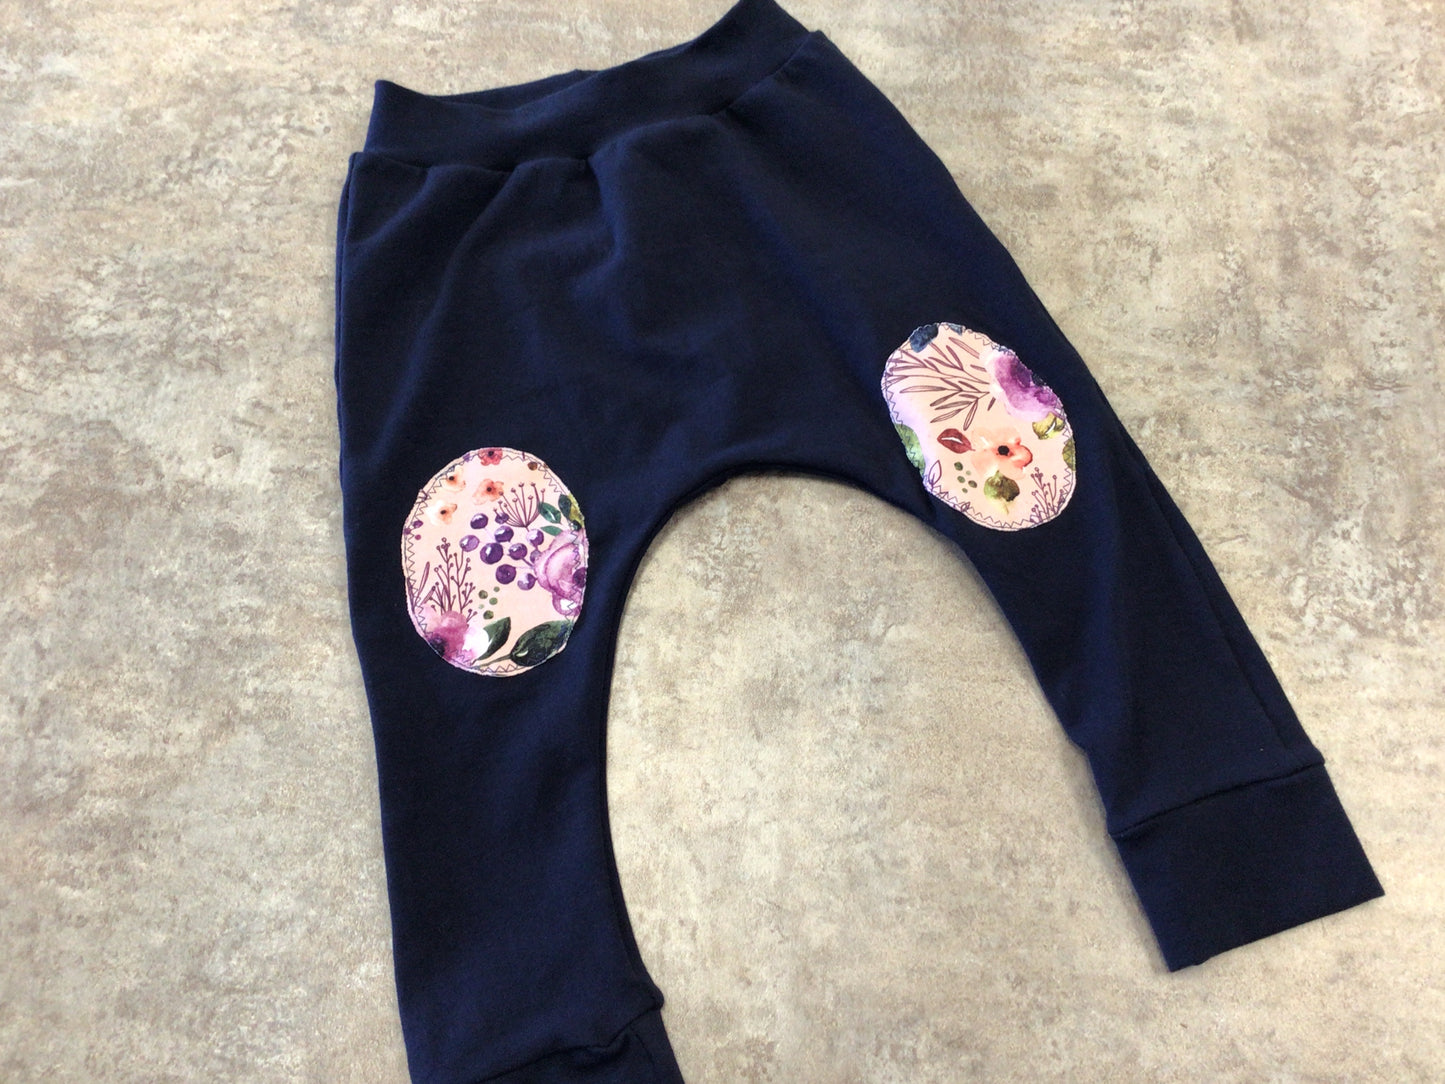 PPC Harem Pants “Navy floral” 24 months